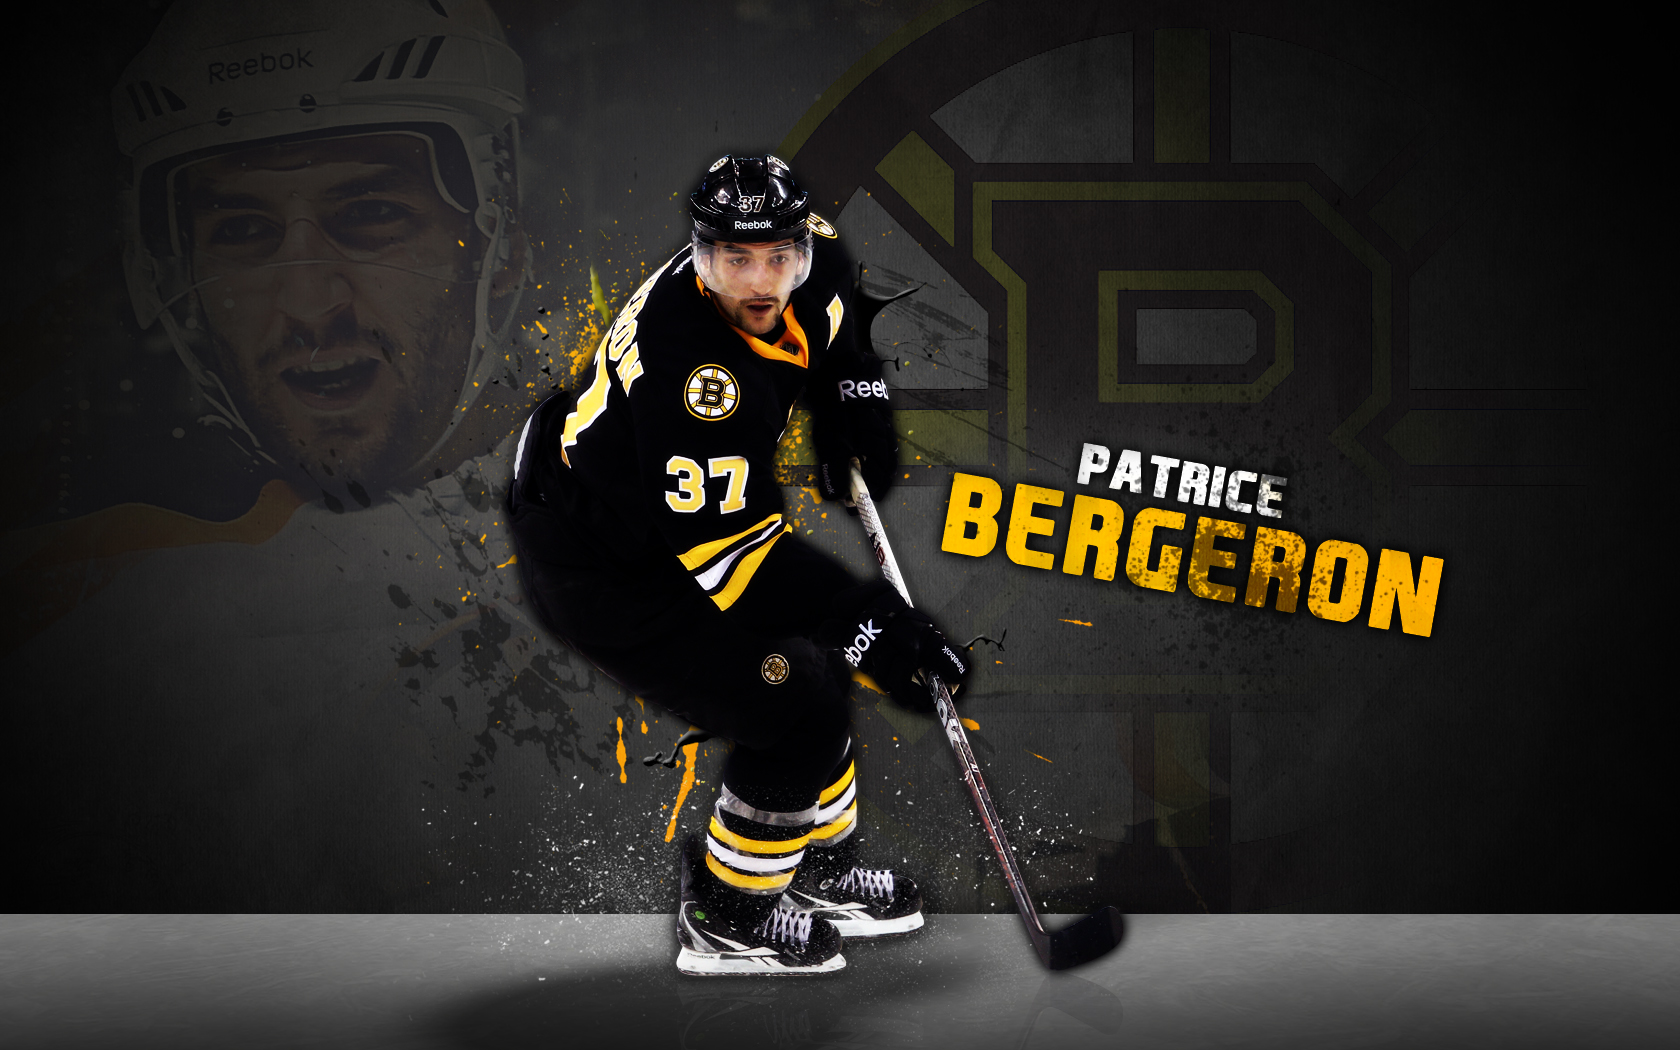 Desktop Wallpaper Featuring Boston Bruins Forward Patrice Bergeron